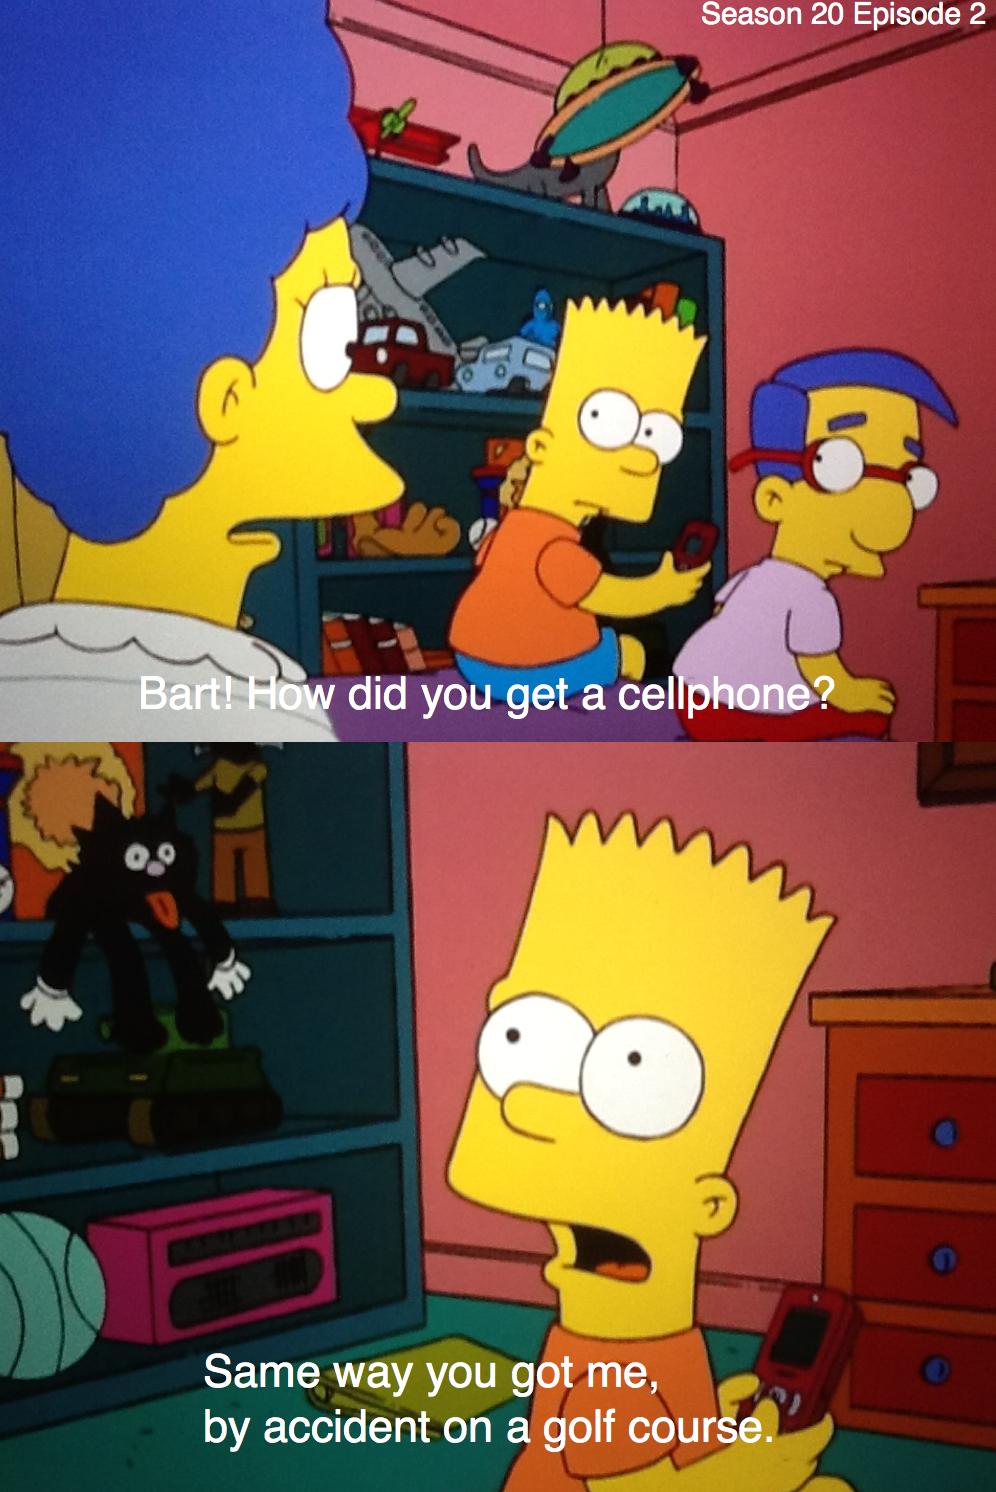 Oh Bart...